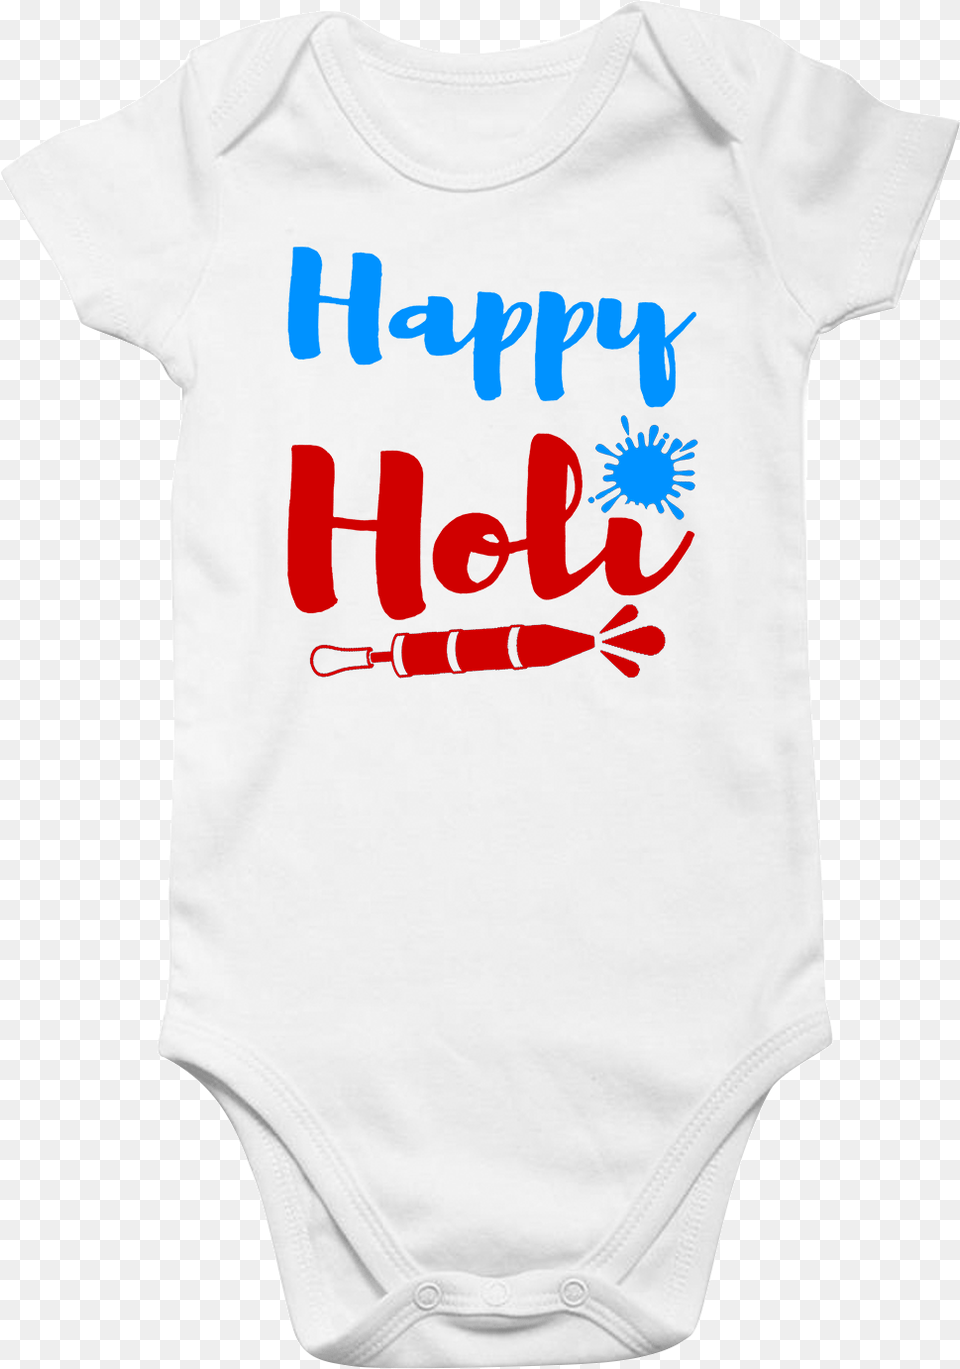 Funcart Happy Holi Baby Romperquottitlequotfuncart Happy Australian And Pakistani Baby, Clothing, T-shirt Free Png